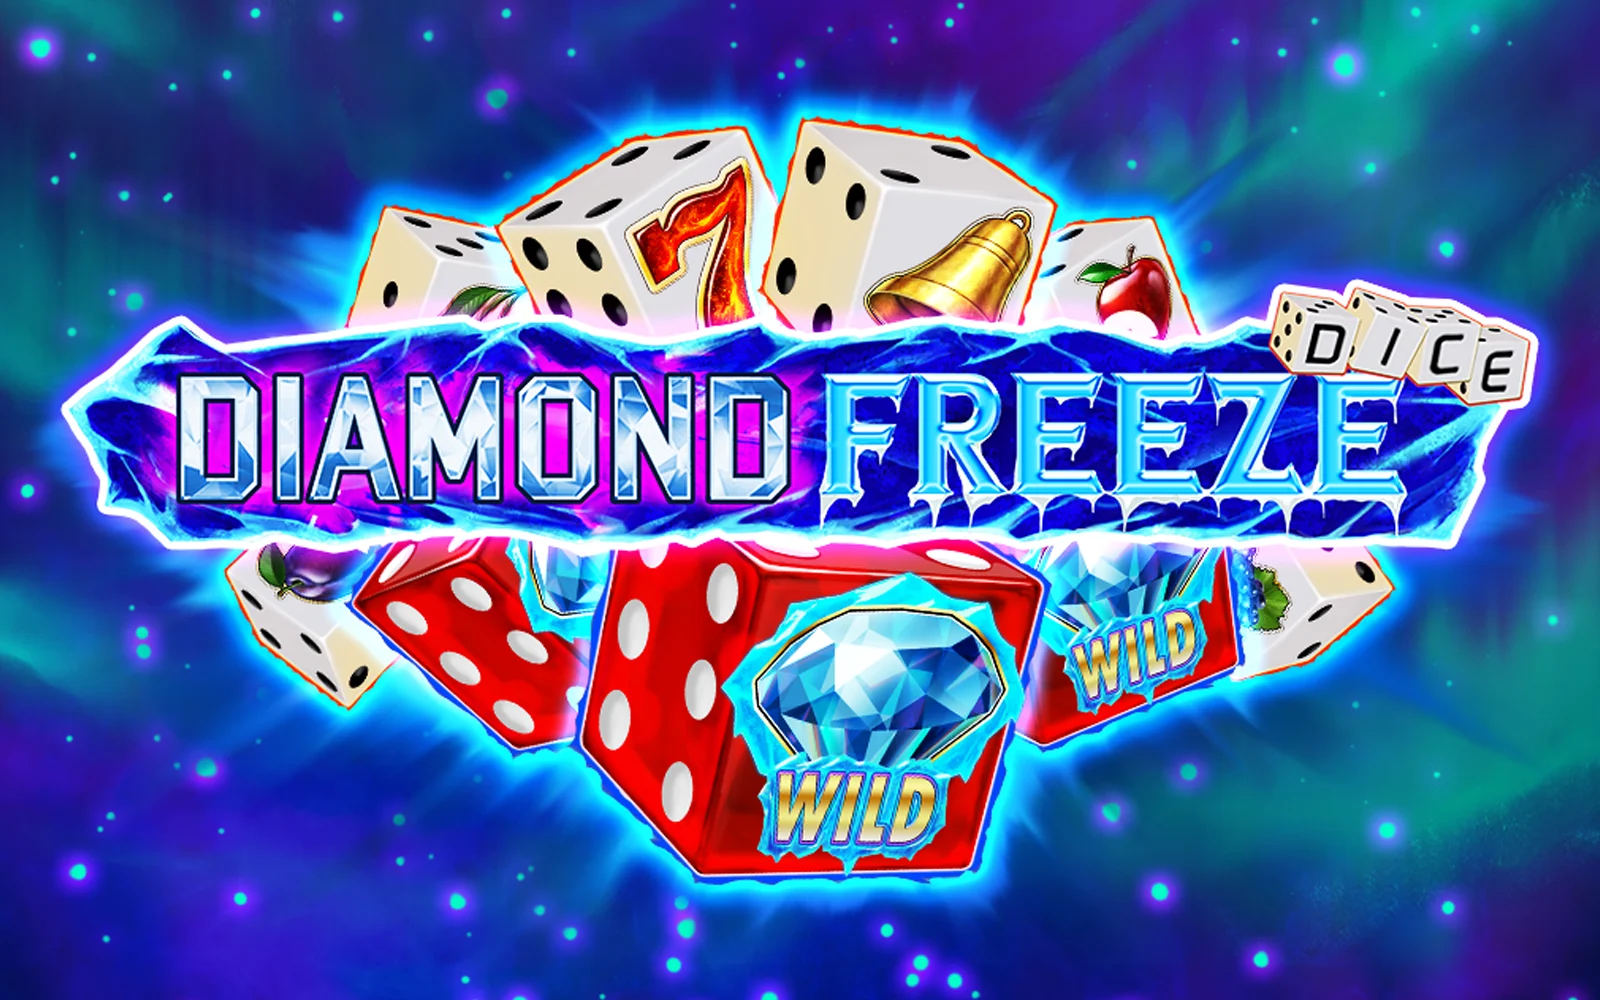 Gioca a Diamond Freeze Dice sul casino online Starcasino.be